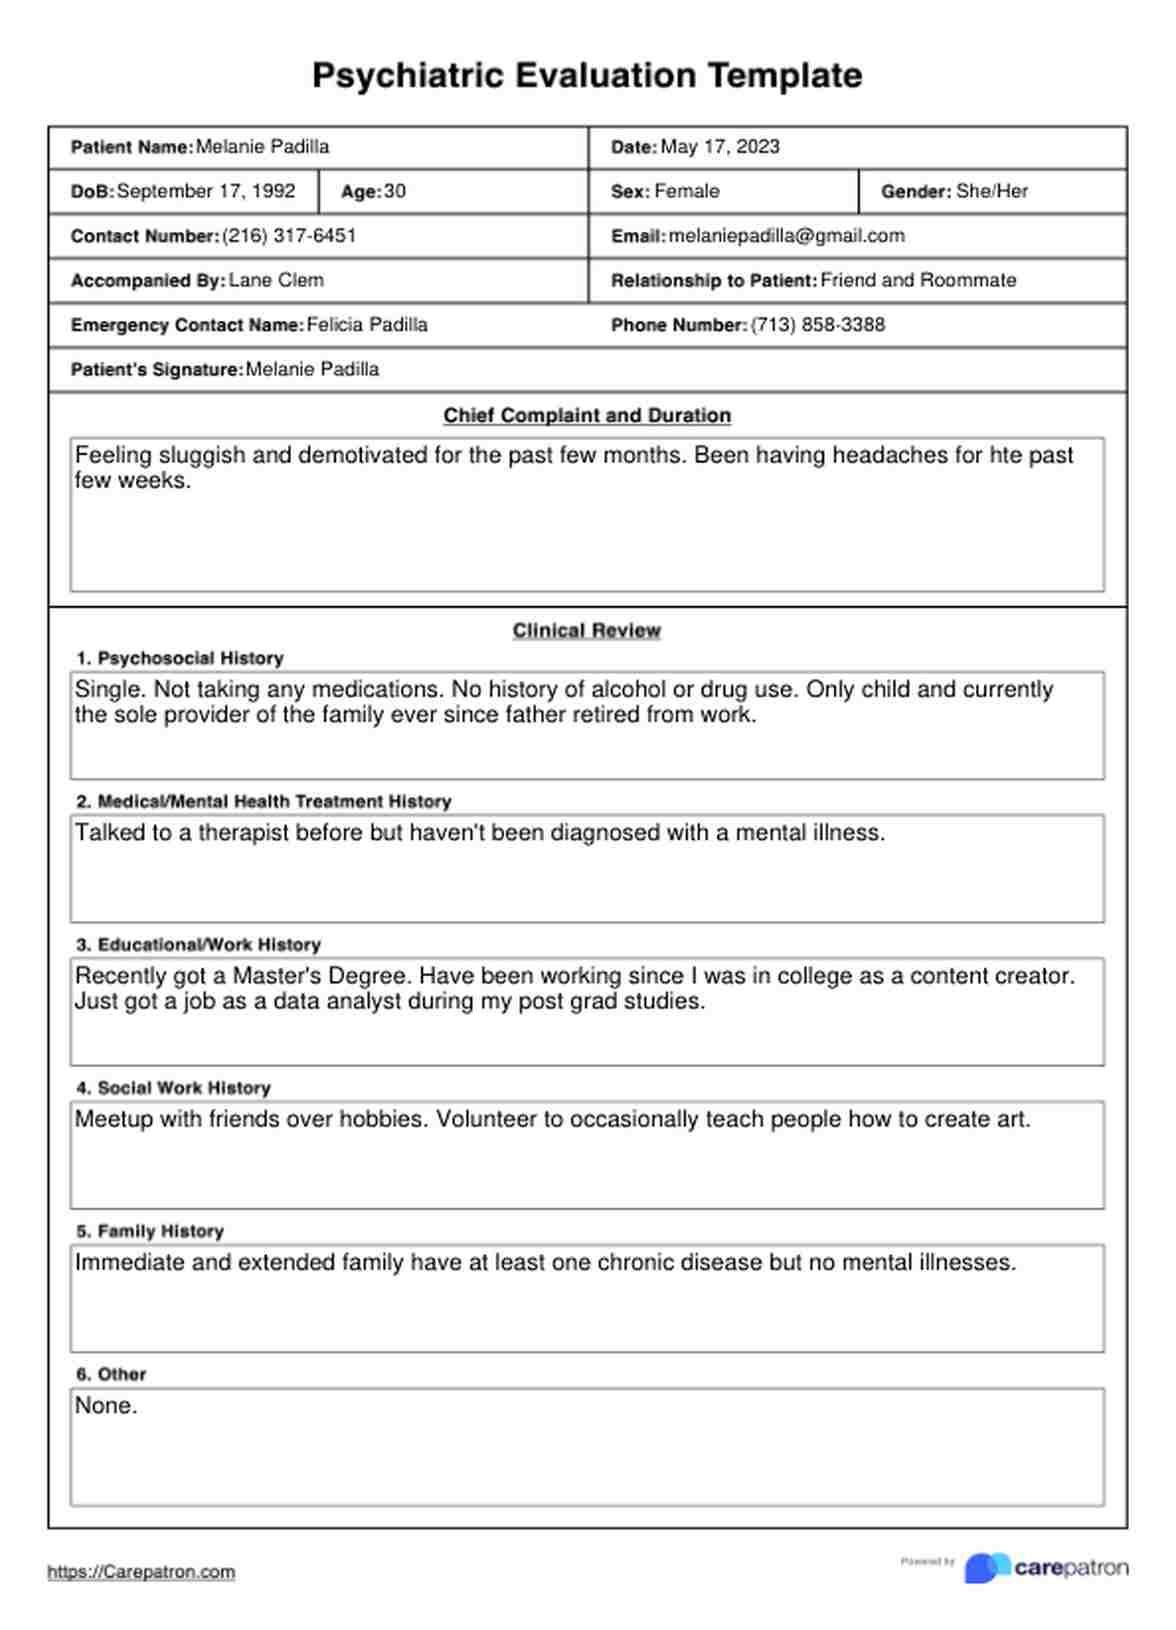 Psychiatric Evaluation Template PDF Example